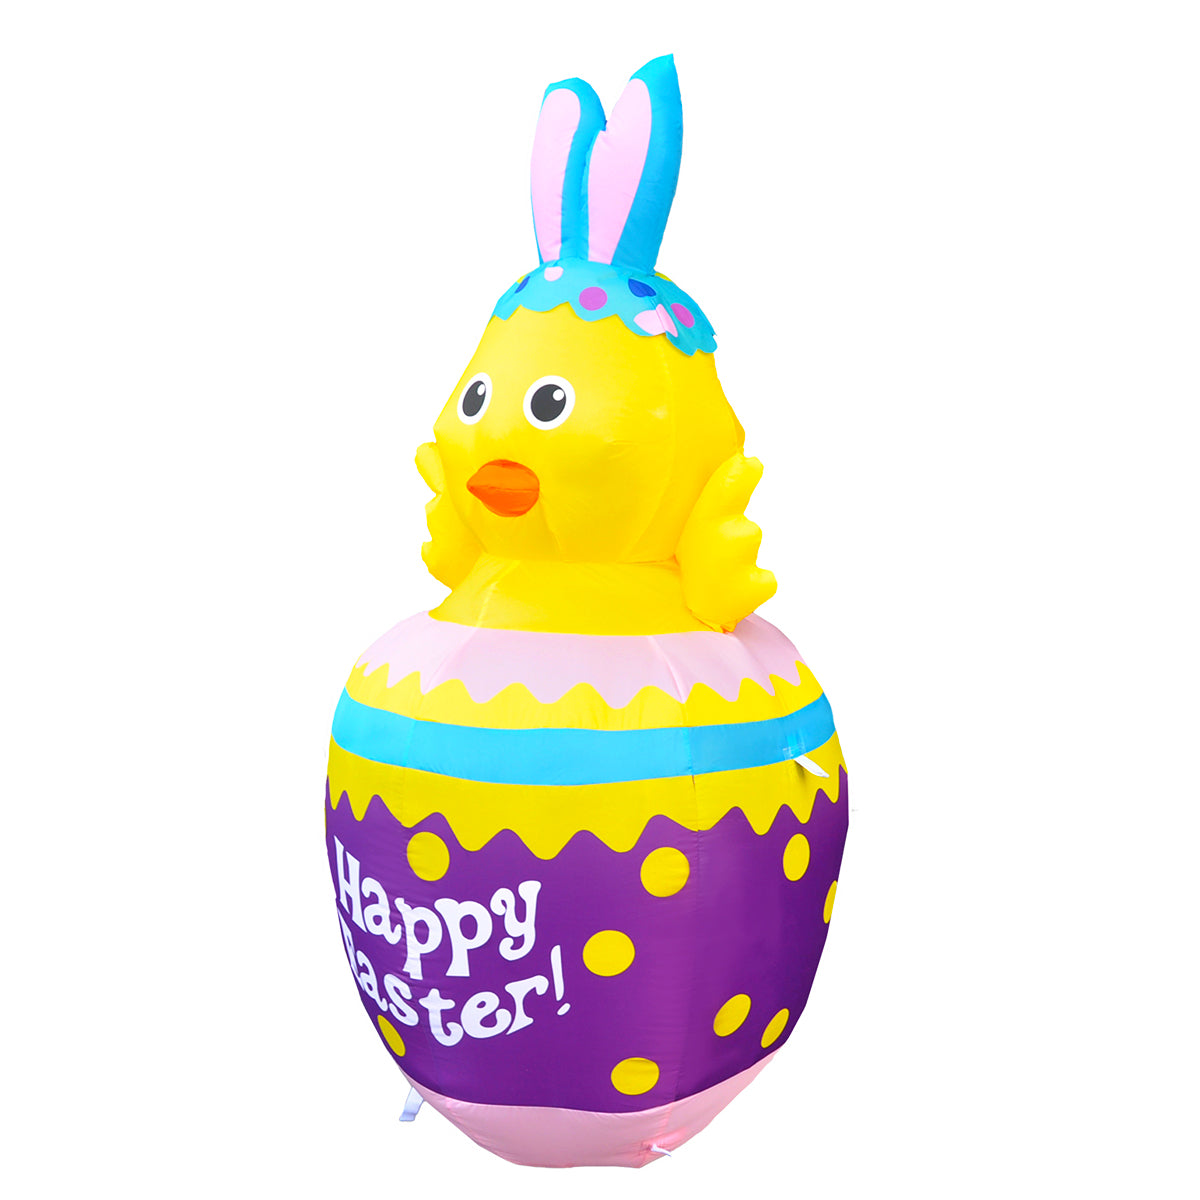 5Ft Seasonblow Easter Inflatable Bunny Ears Chick Born.